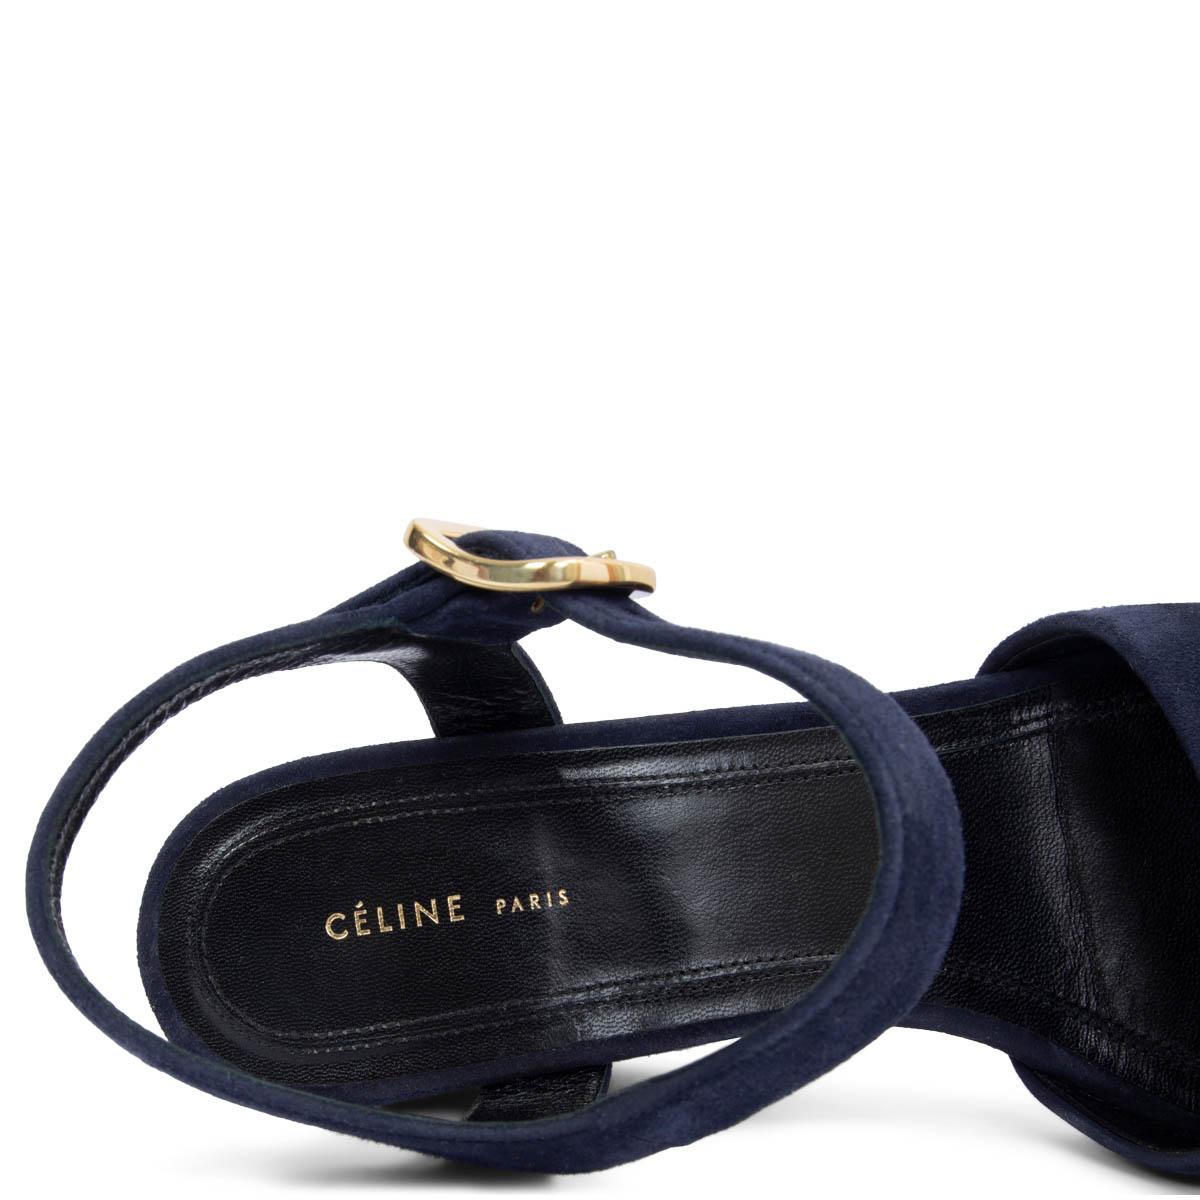 CELINE navy blue suede 2016 BLOCK HEEL Sandals Shoes 36 For Sale 2